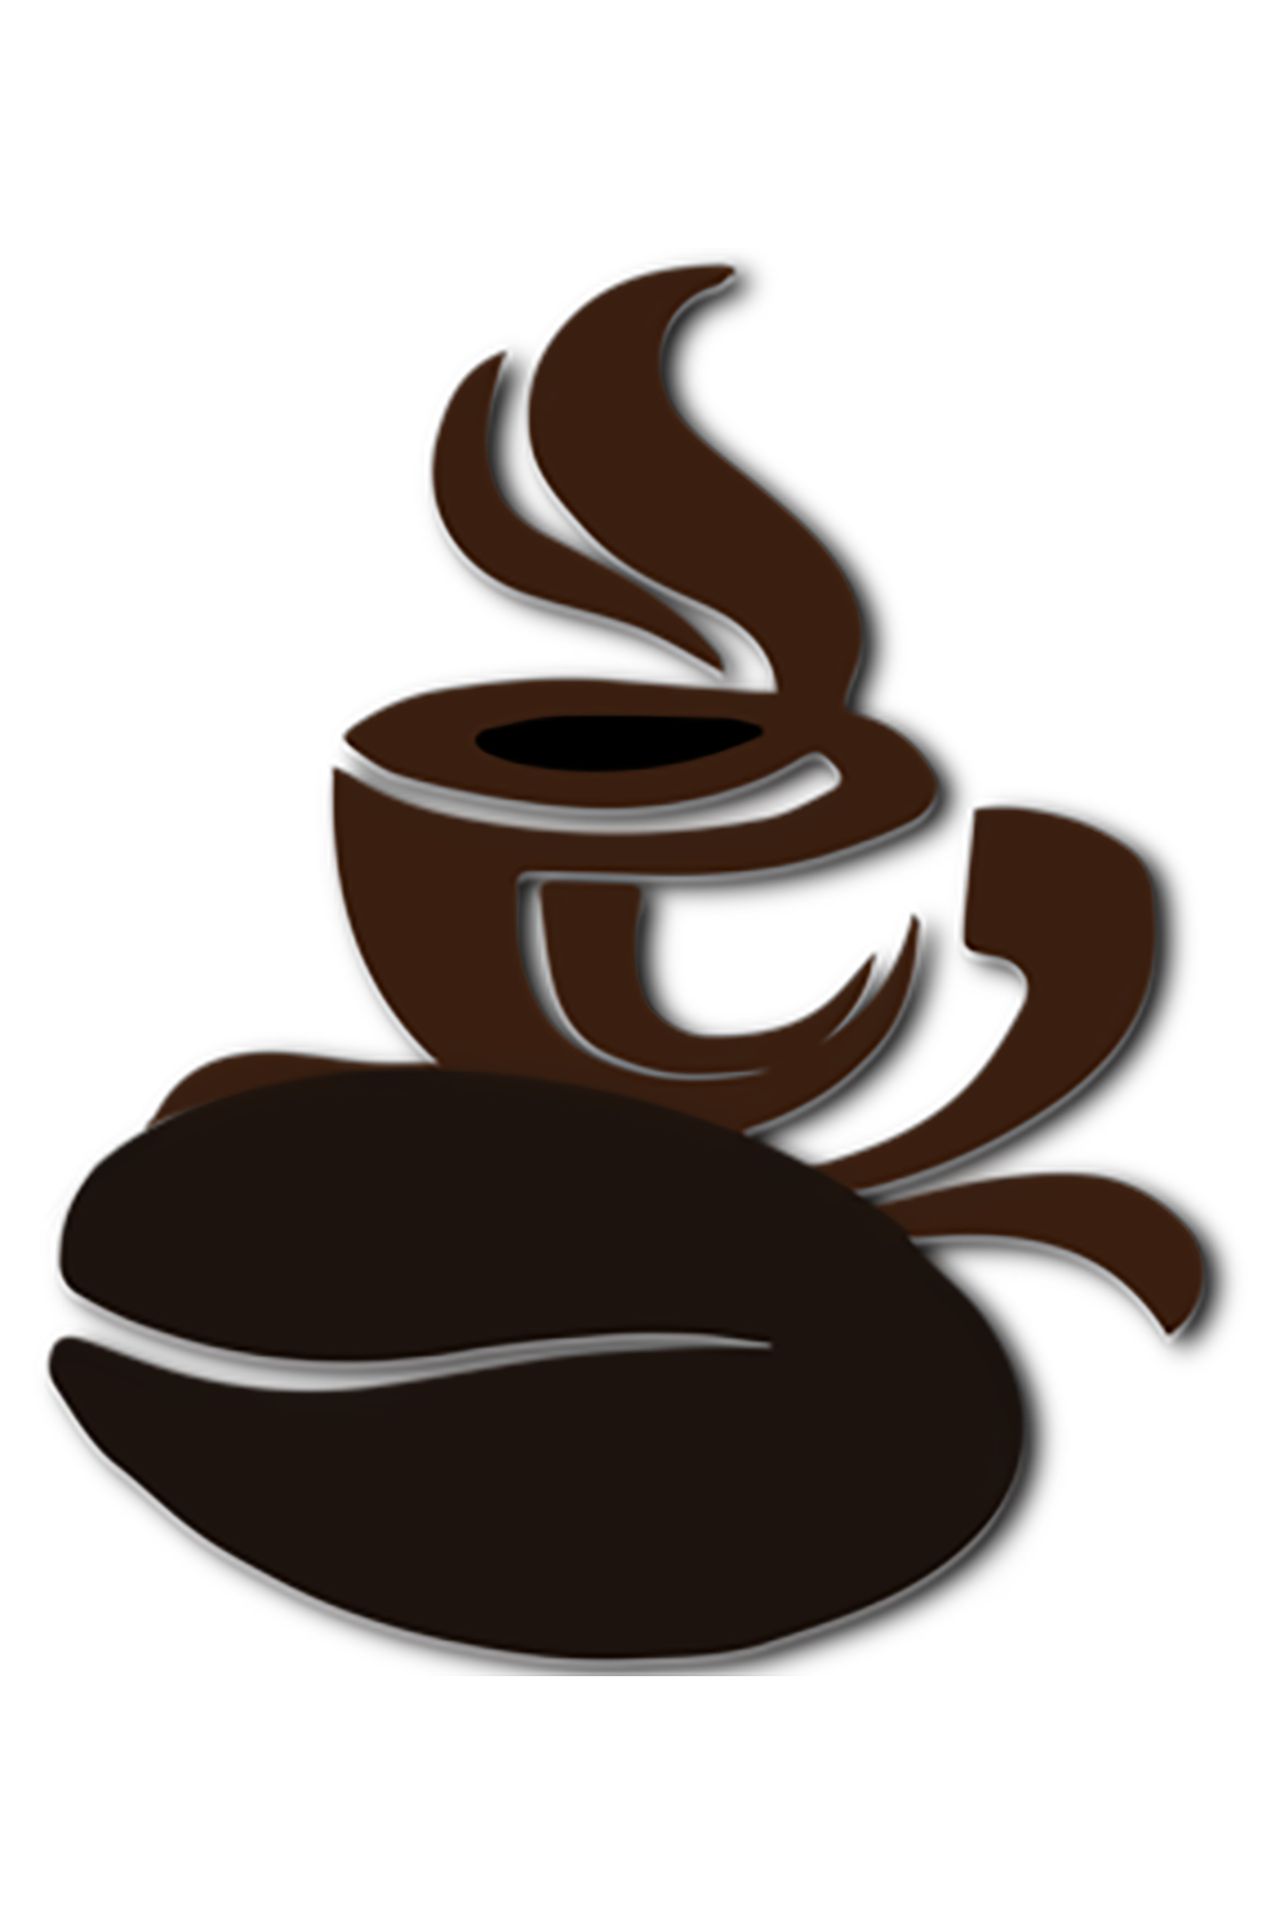 Hope Coffee Uganda